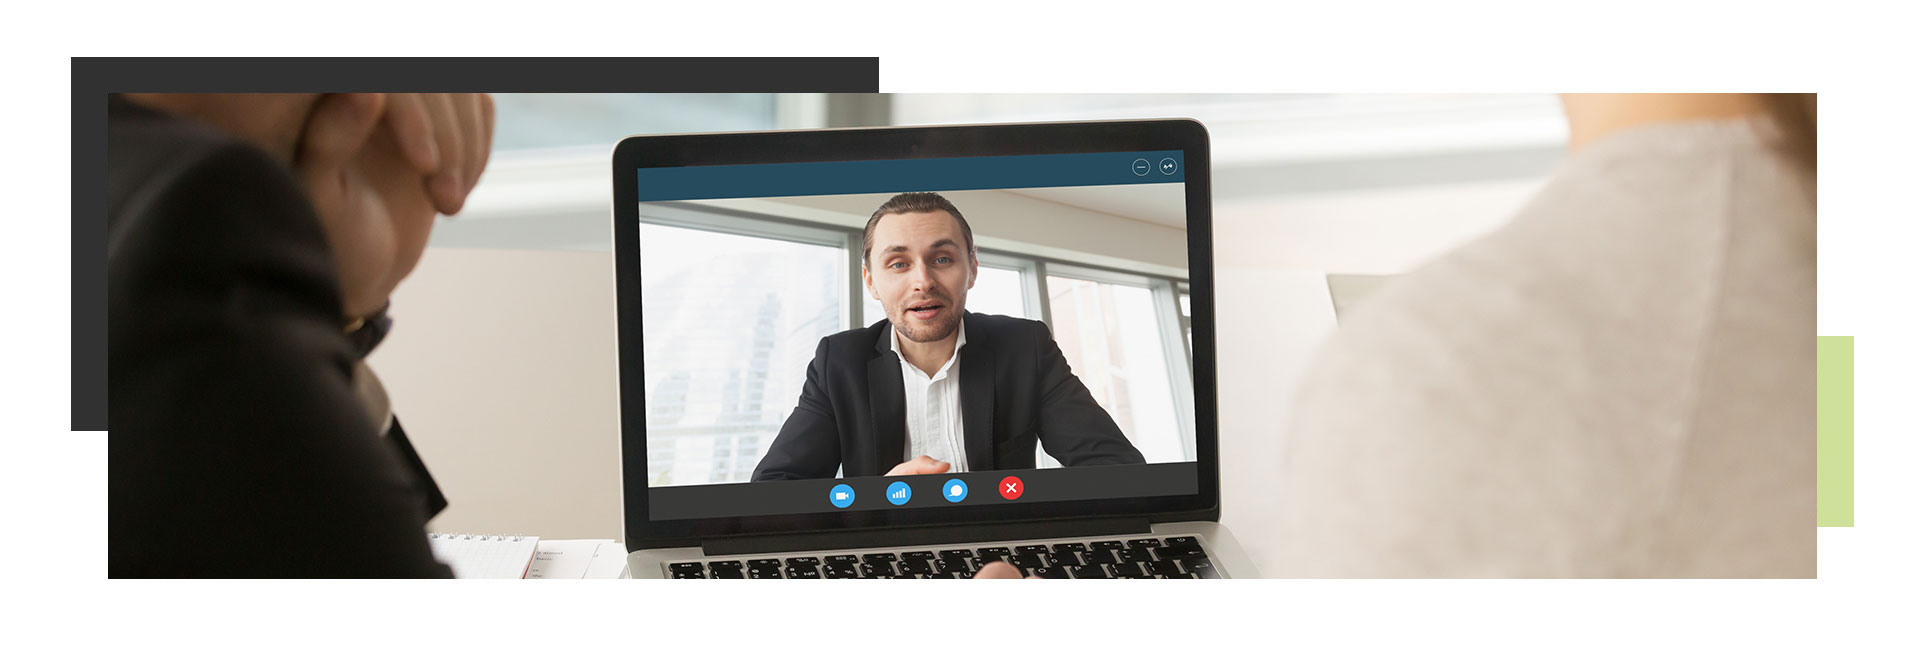 virtual video conference coaching